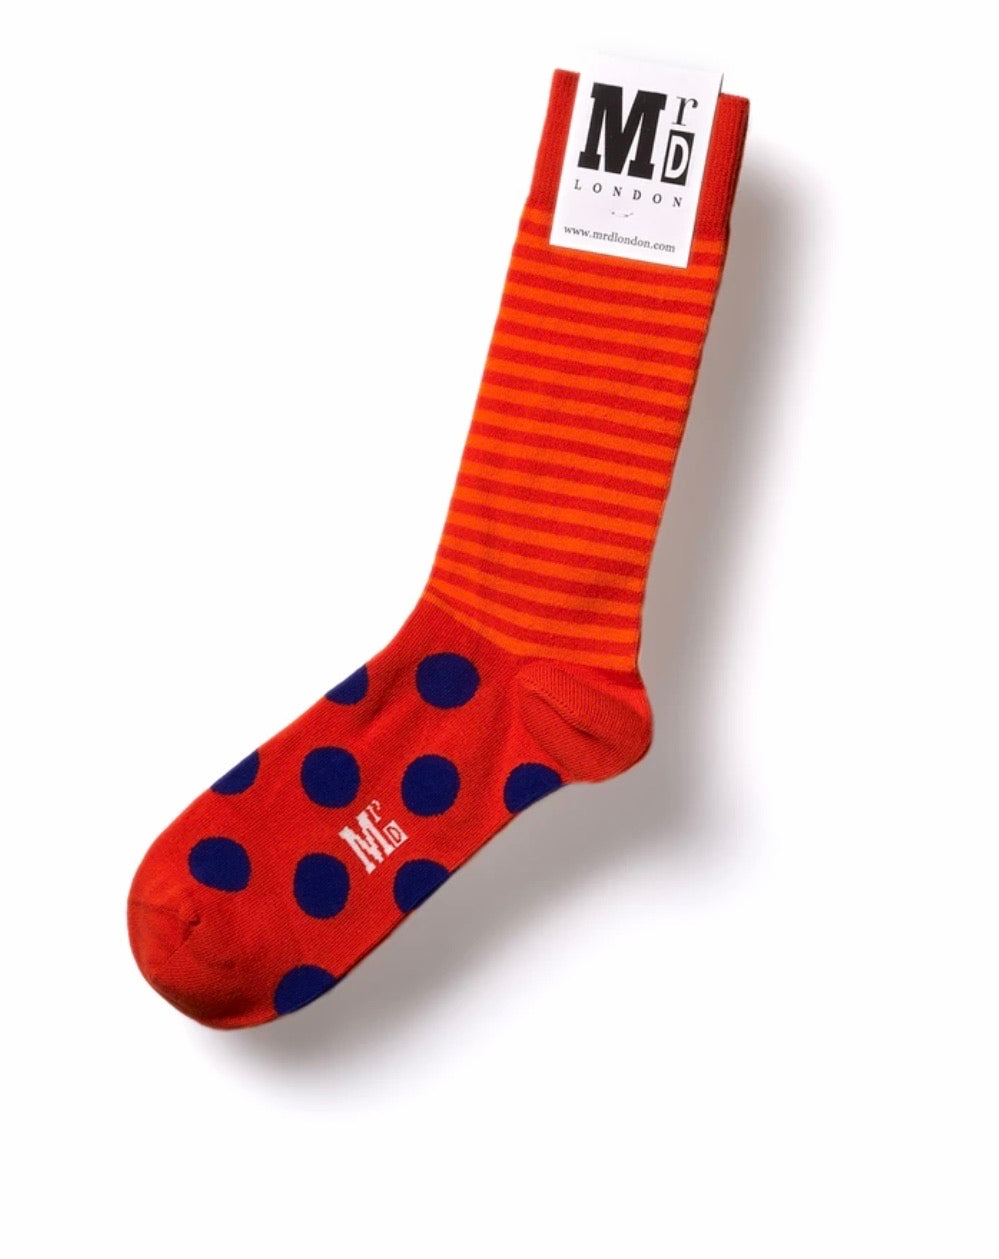 Quirky Mr D London Socks - Design Stripe Spot